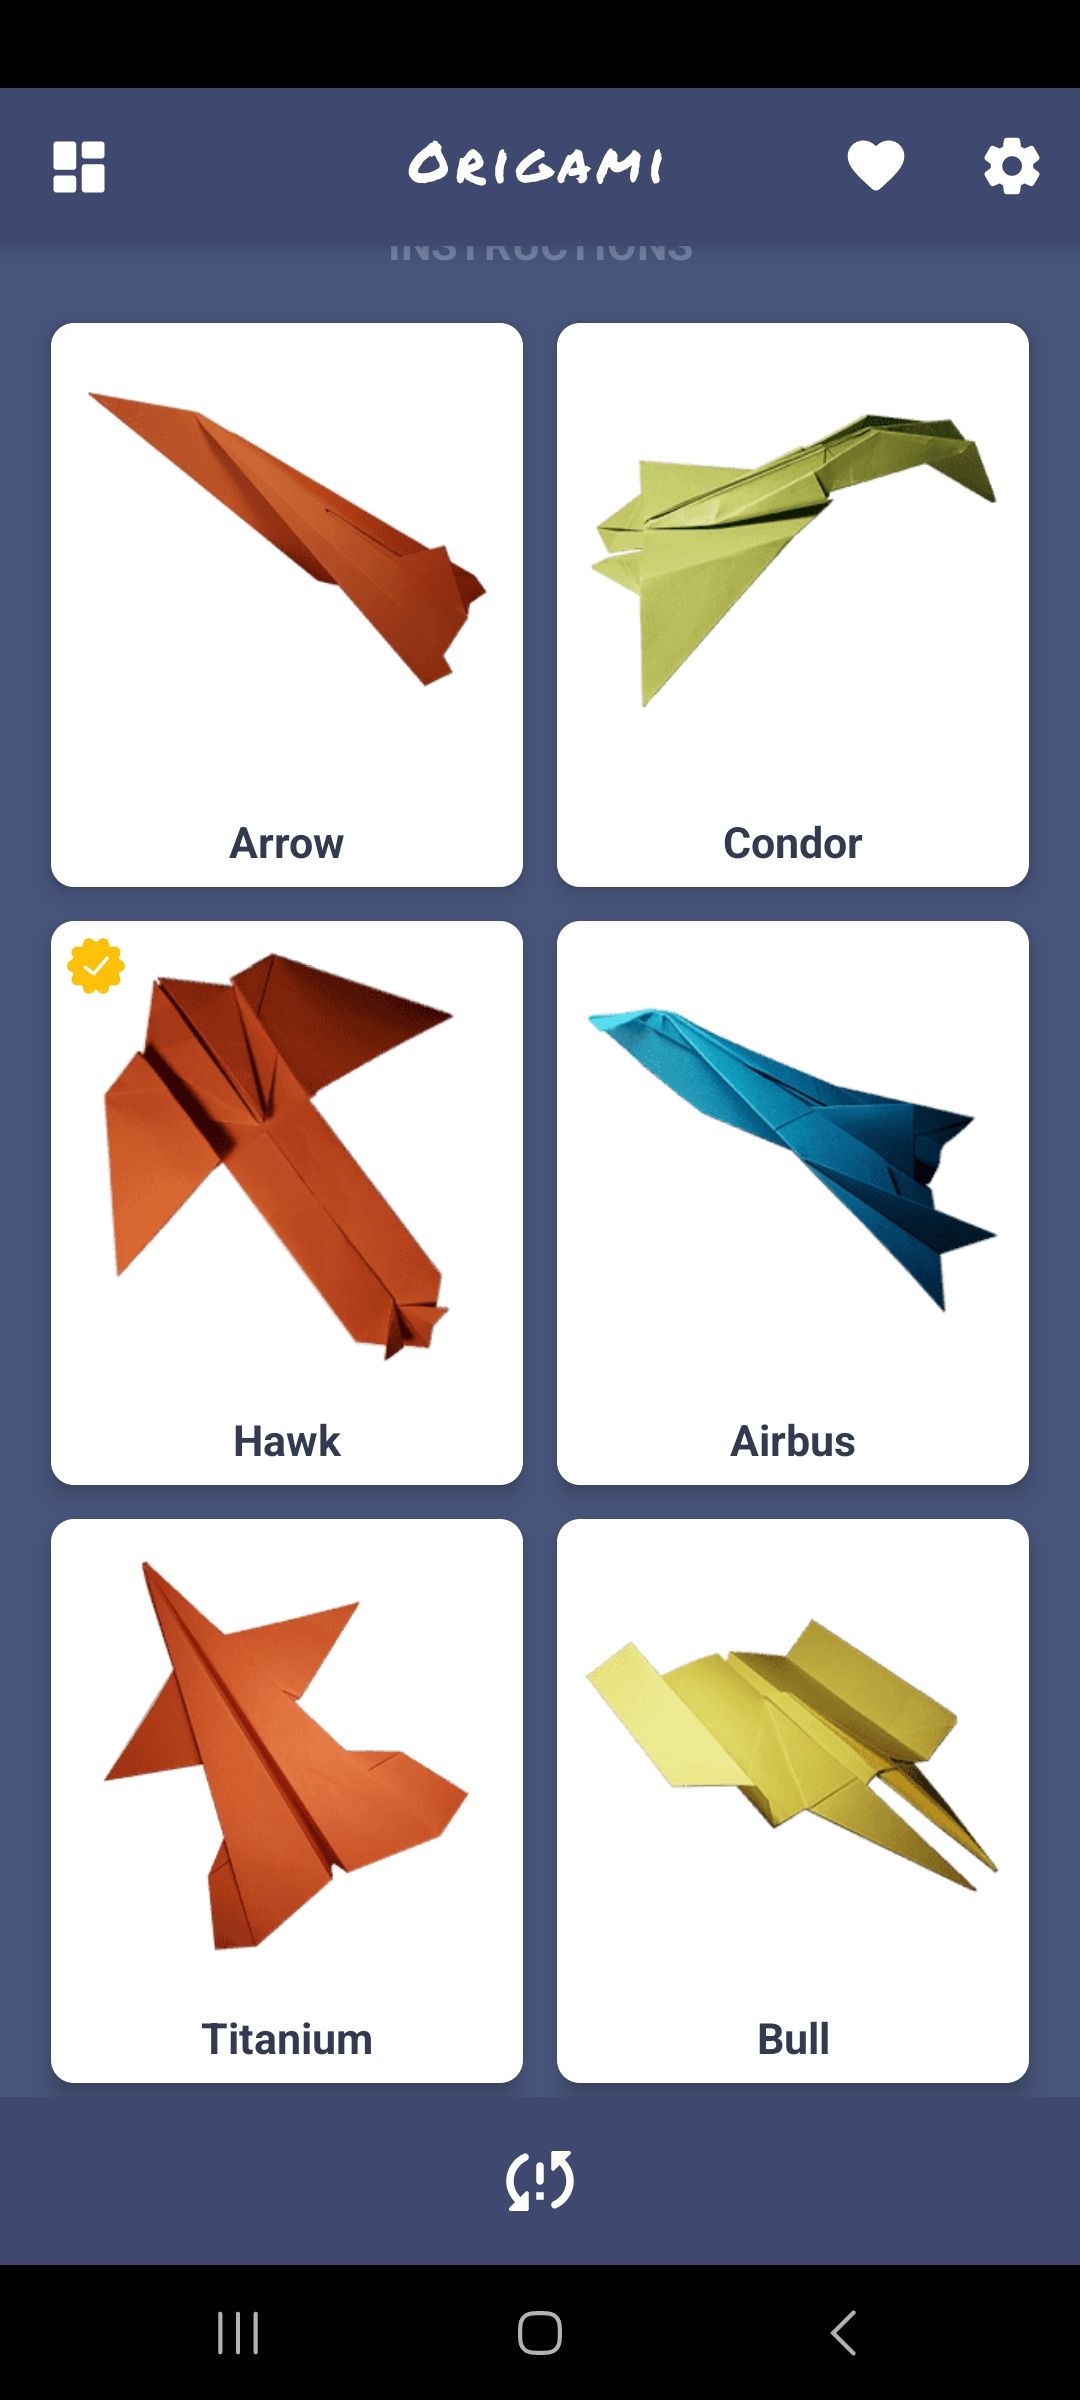 Origami aircraft app